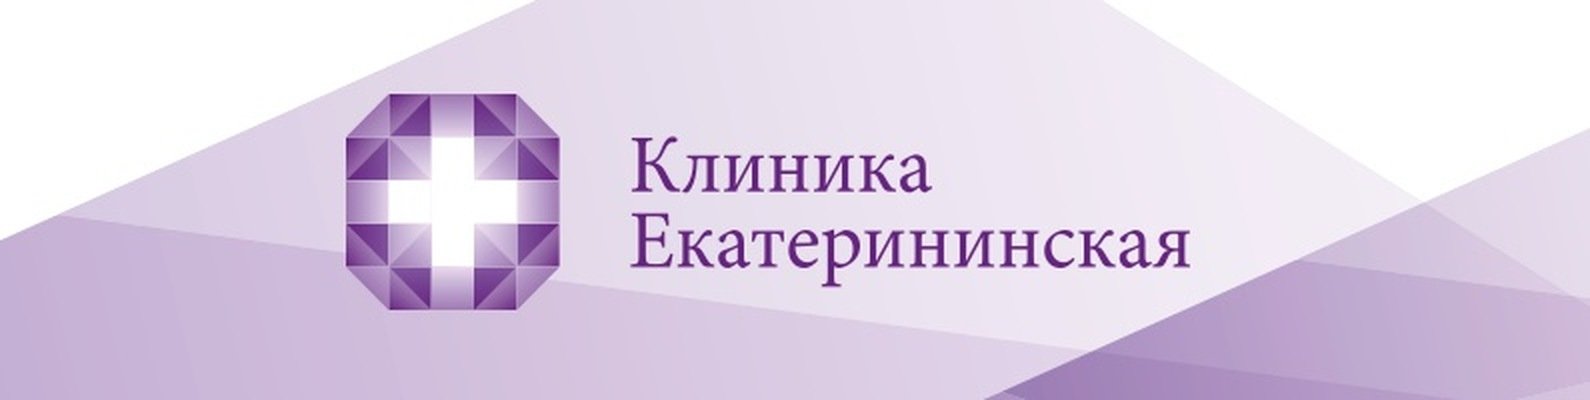 Клиника екатерининская логотип